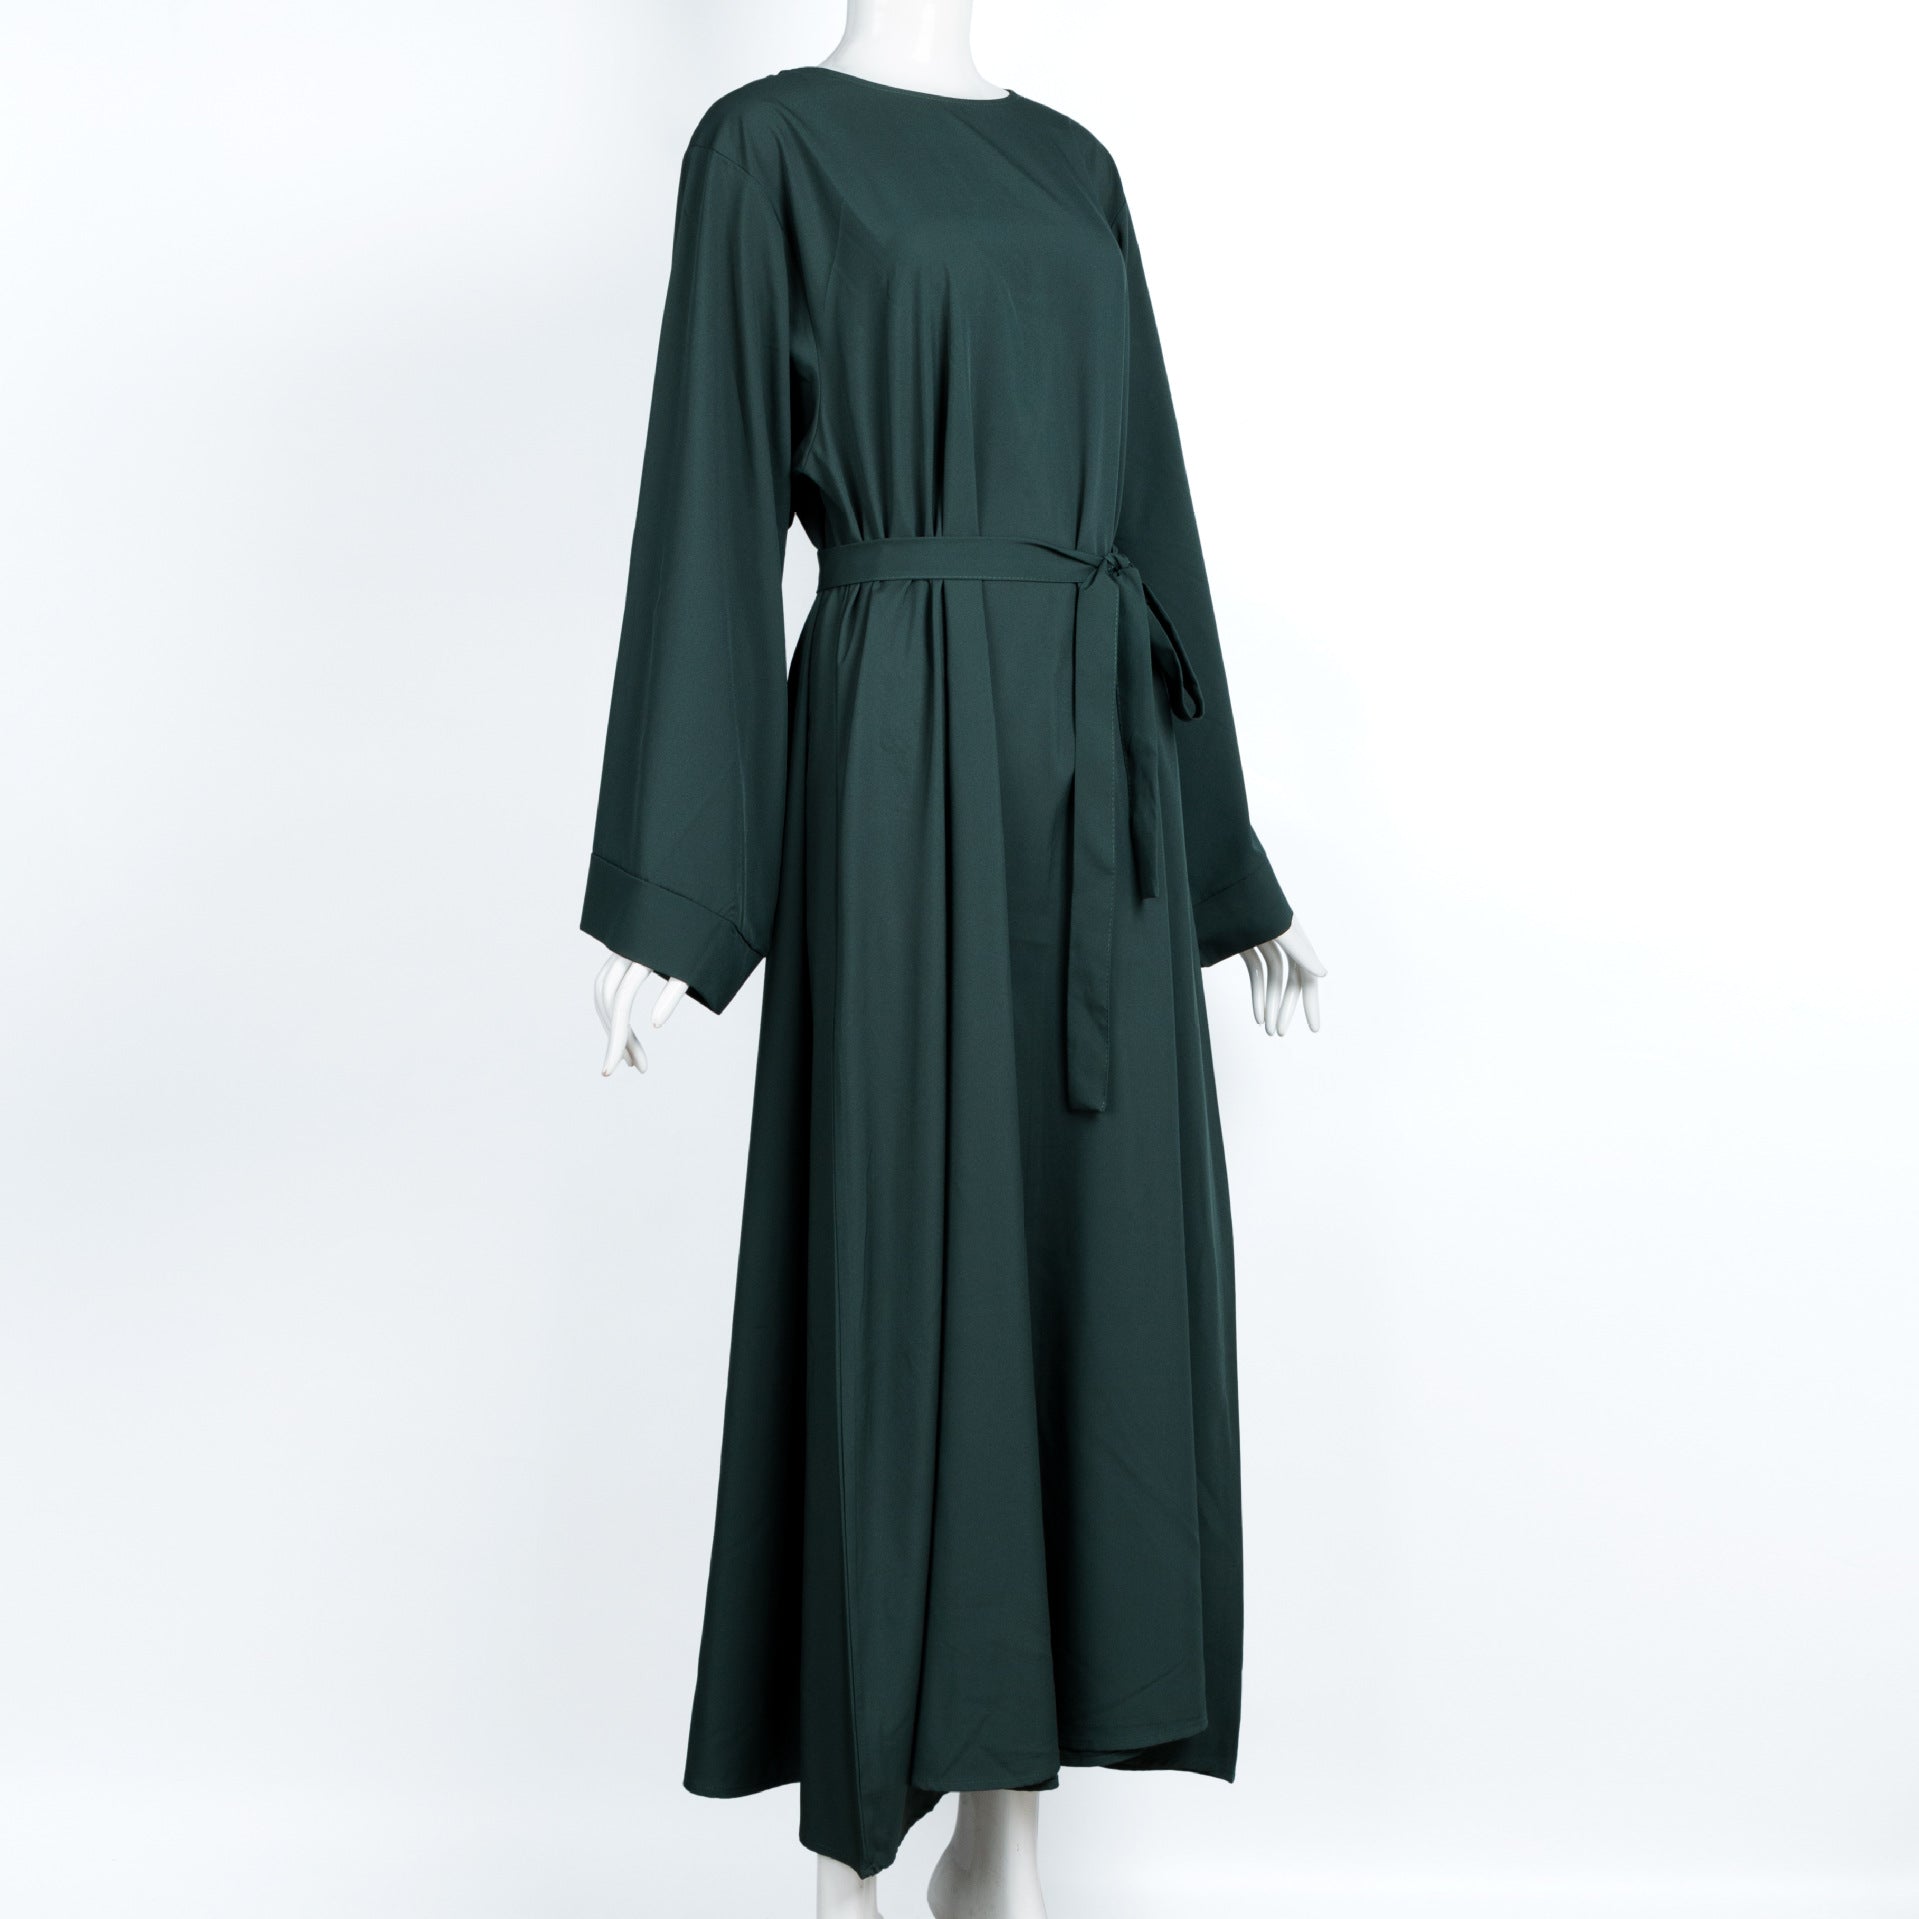 Women's Fashionable Winter Casual Elegant Cotton Long Sleeve Dresses